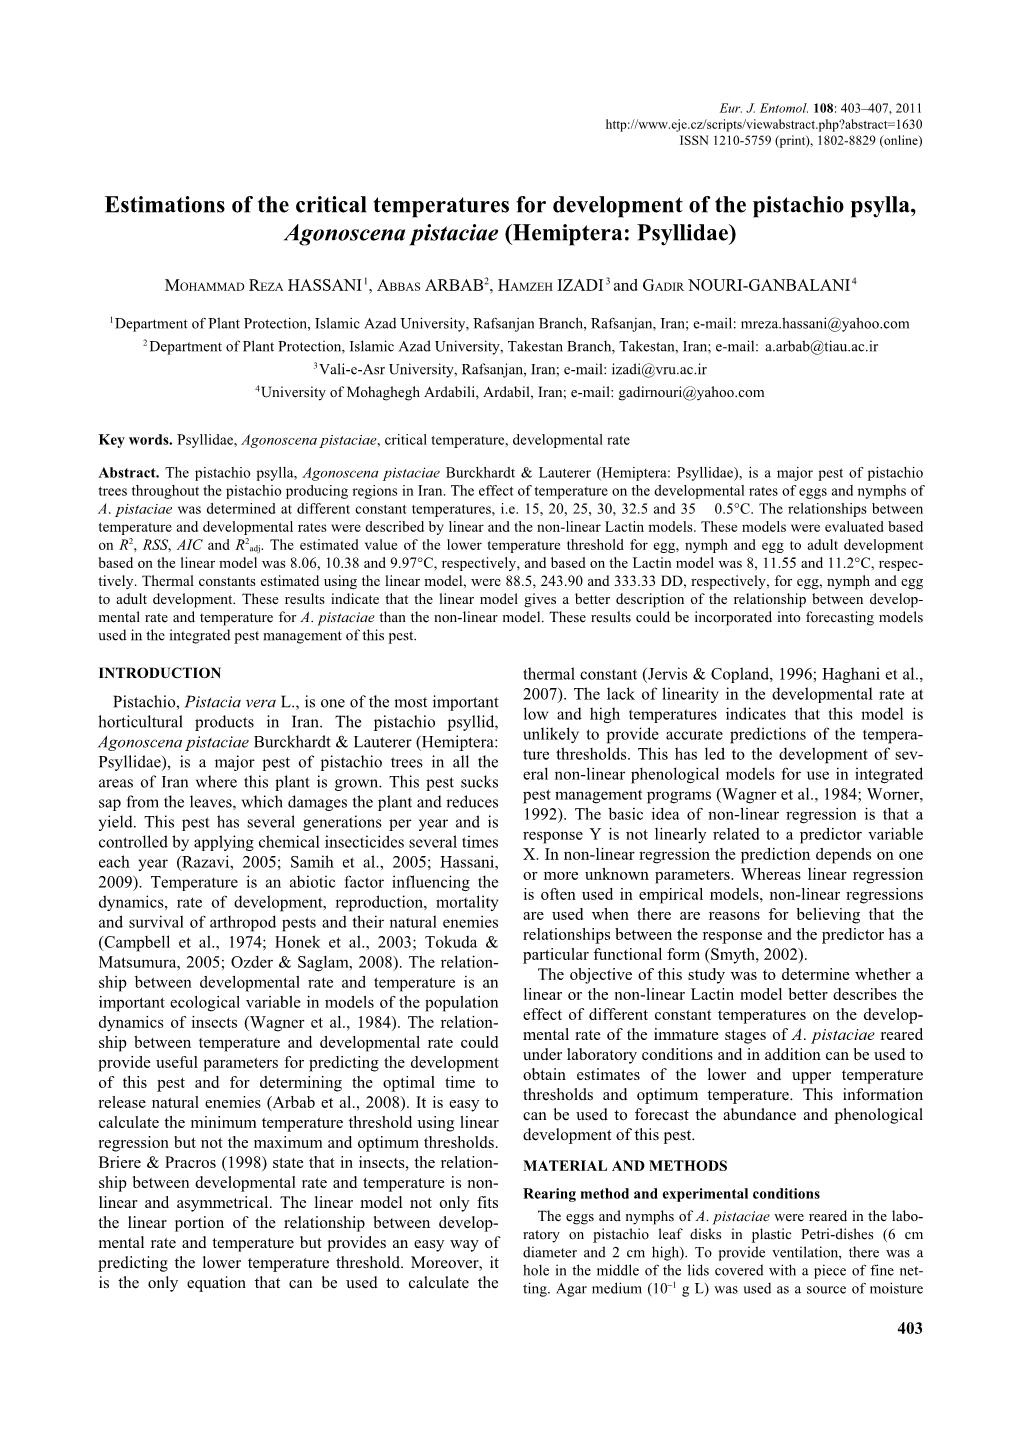 Estimations of the Critical Temperatures for Development of the Pistachio Psylla, Agonoscena Pistaciae (Hemiptera: Psyllidae)